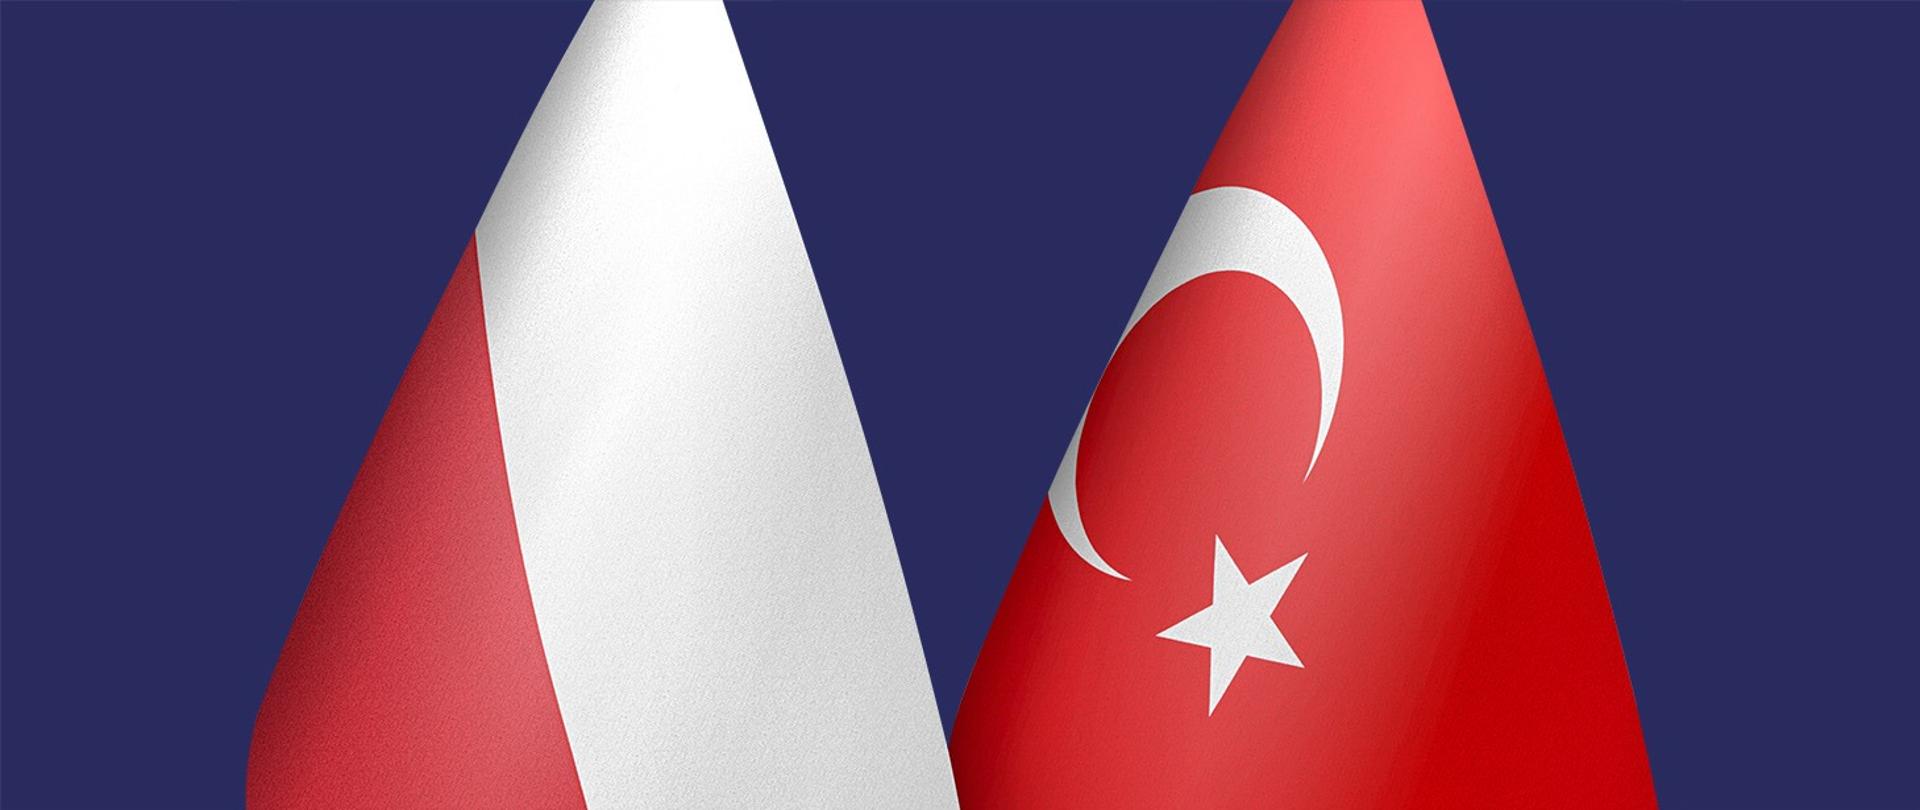 Flaga Polski oraz flaga Turcji